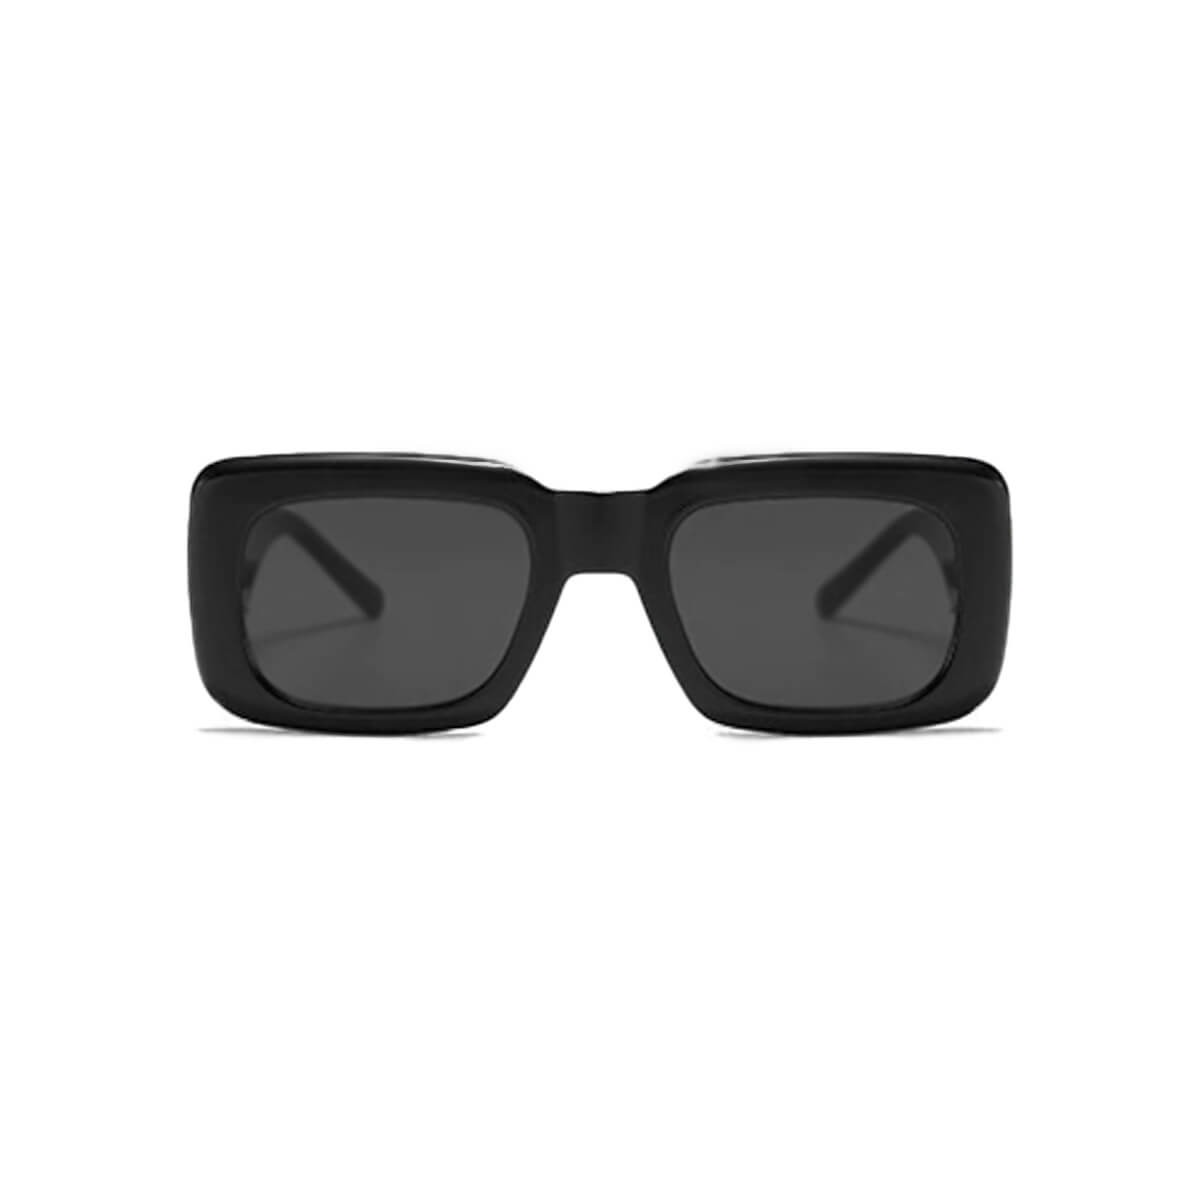 Oversized Black Frame and Lens Sunglasses Front